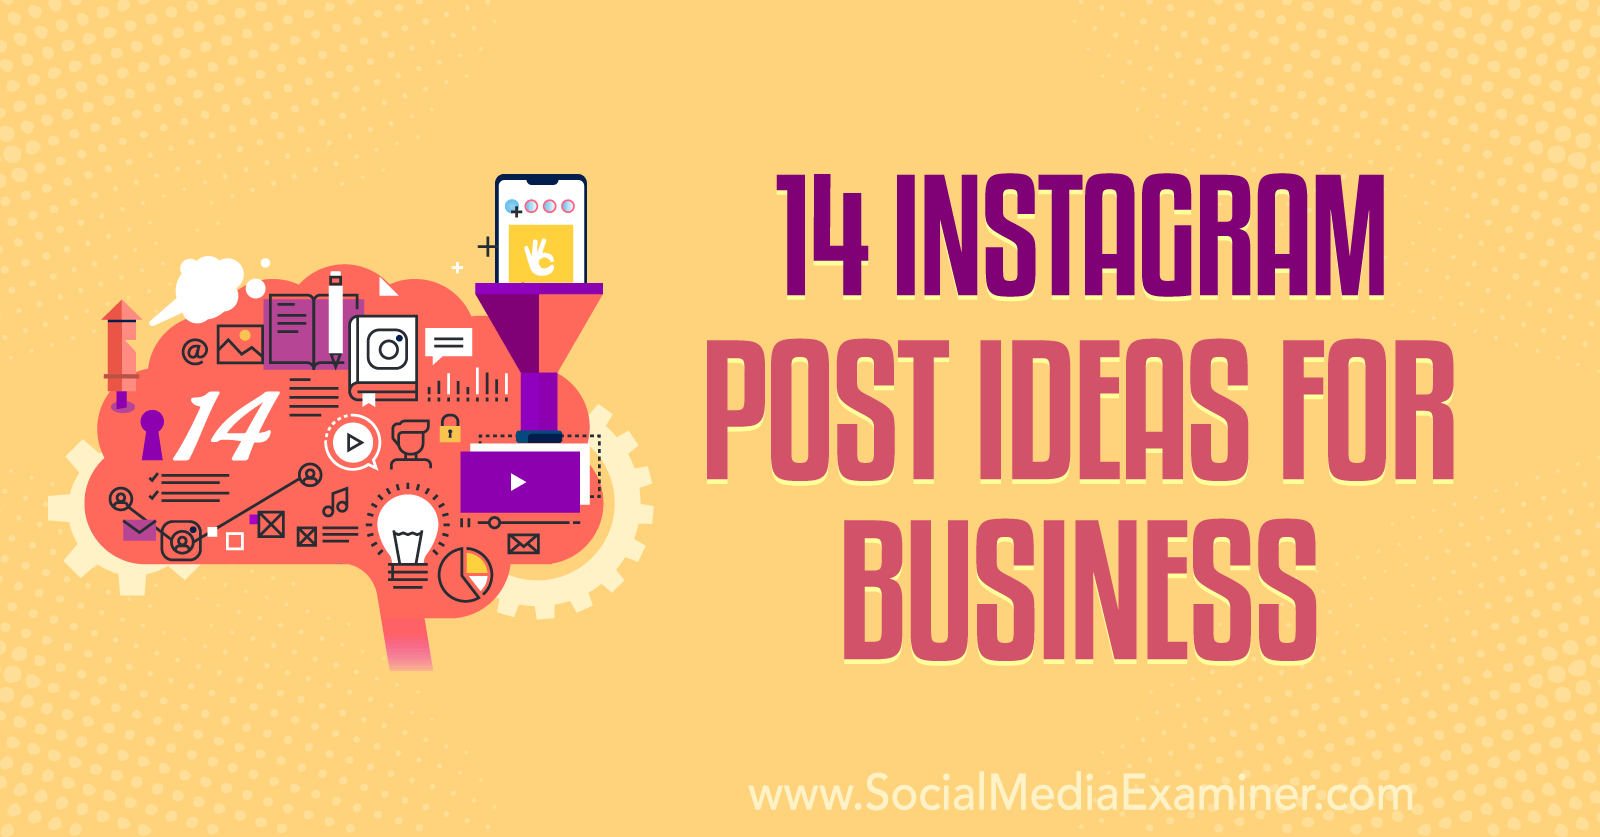 14 Instagram Post Ideas for Business by Anna Sonnenberg on Social Media Examiner.